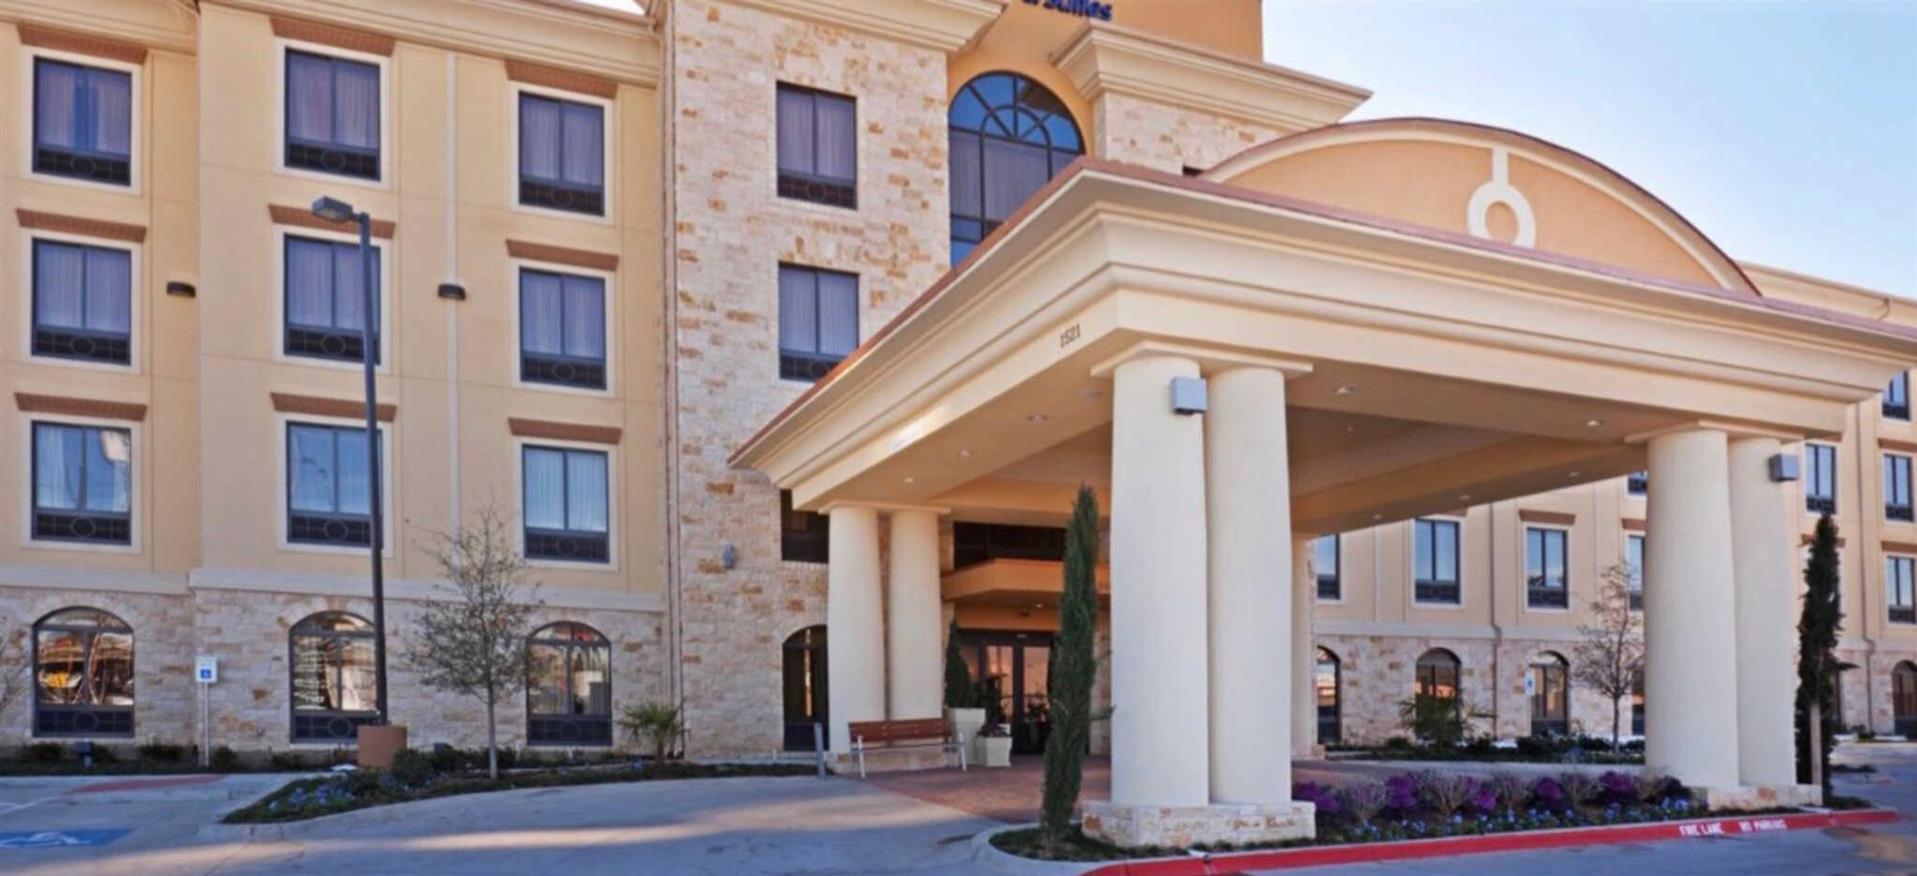 Comfort Inn & Suites - Dallas in Dallas, TX